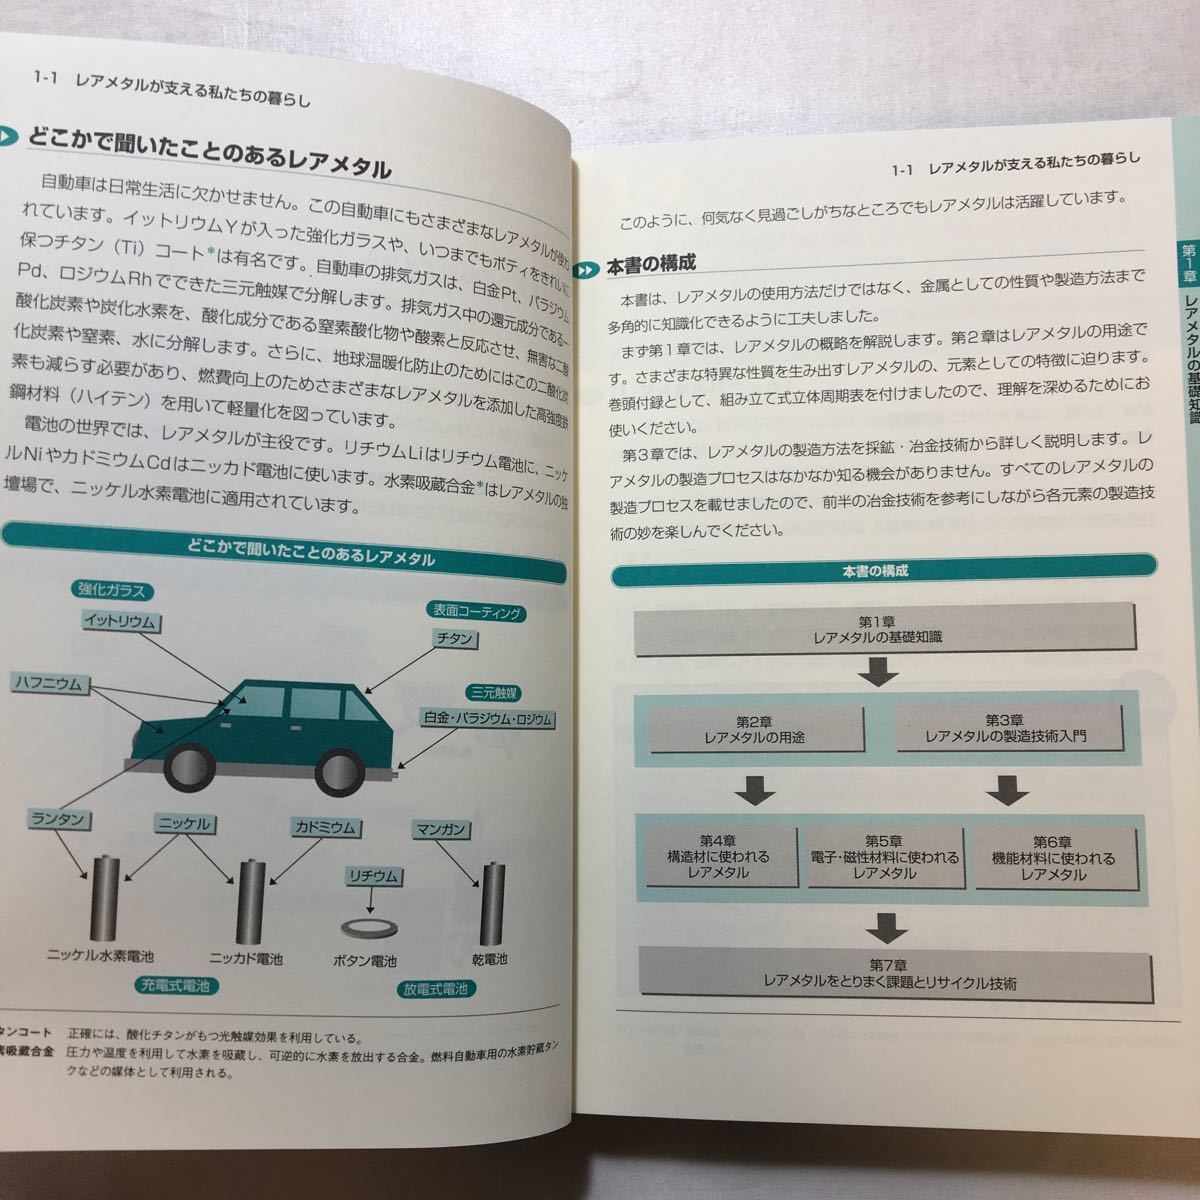 zaa-264♪図解入門よくわかる最新レアメタルの基本と仕組み (How‐nual Visual Guide Book) 単行本 2007/11/12 田中 和明 (著)